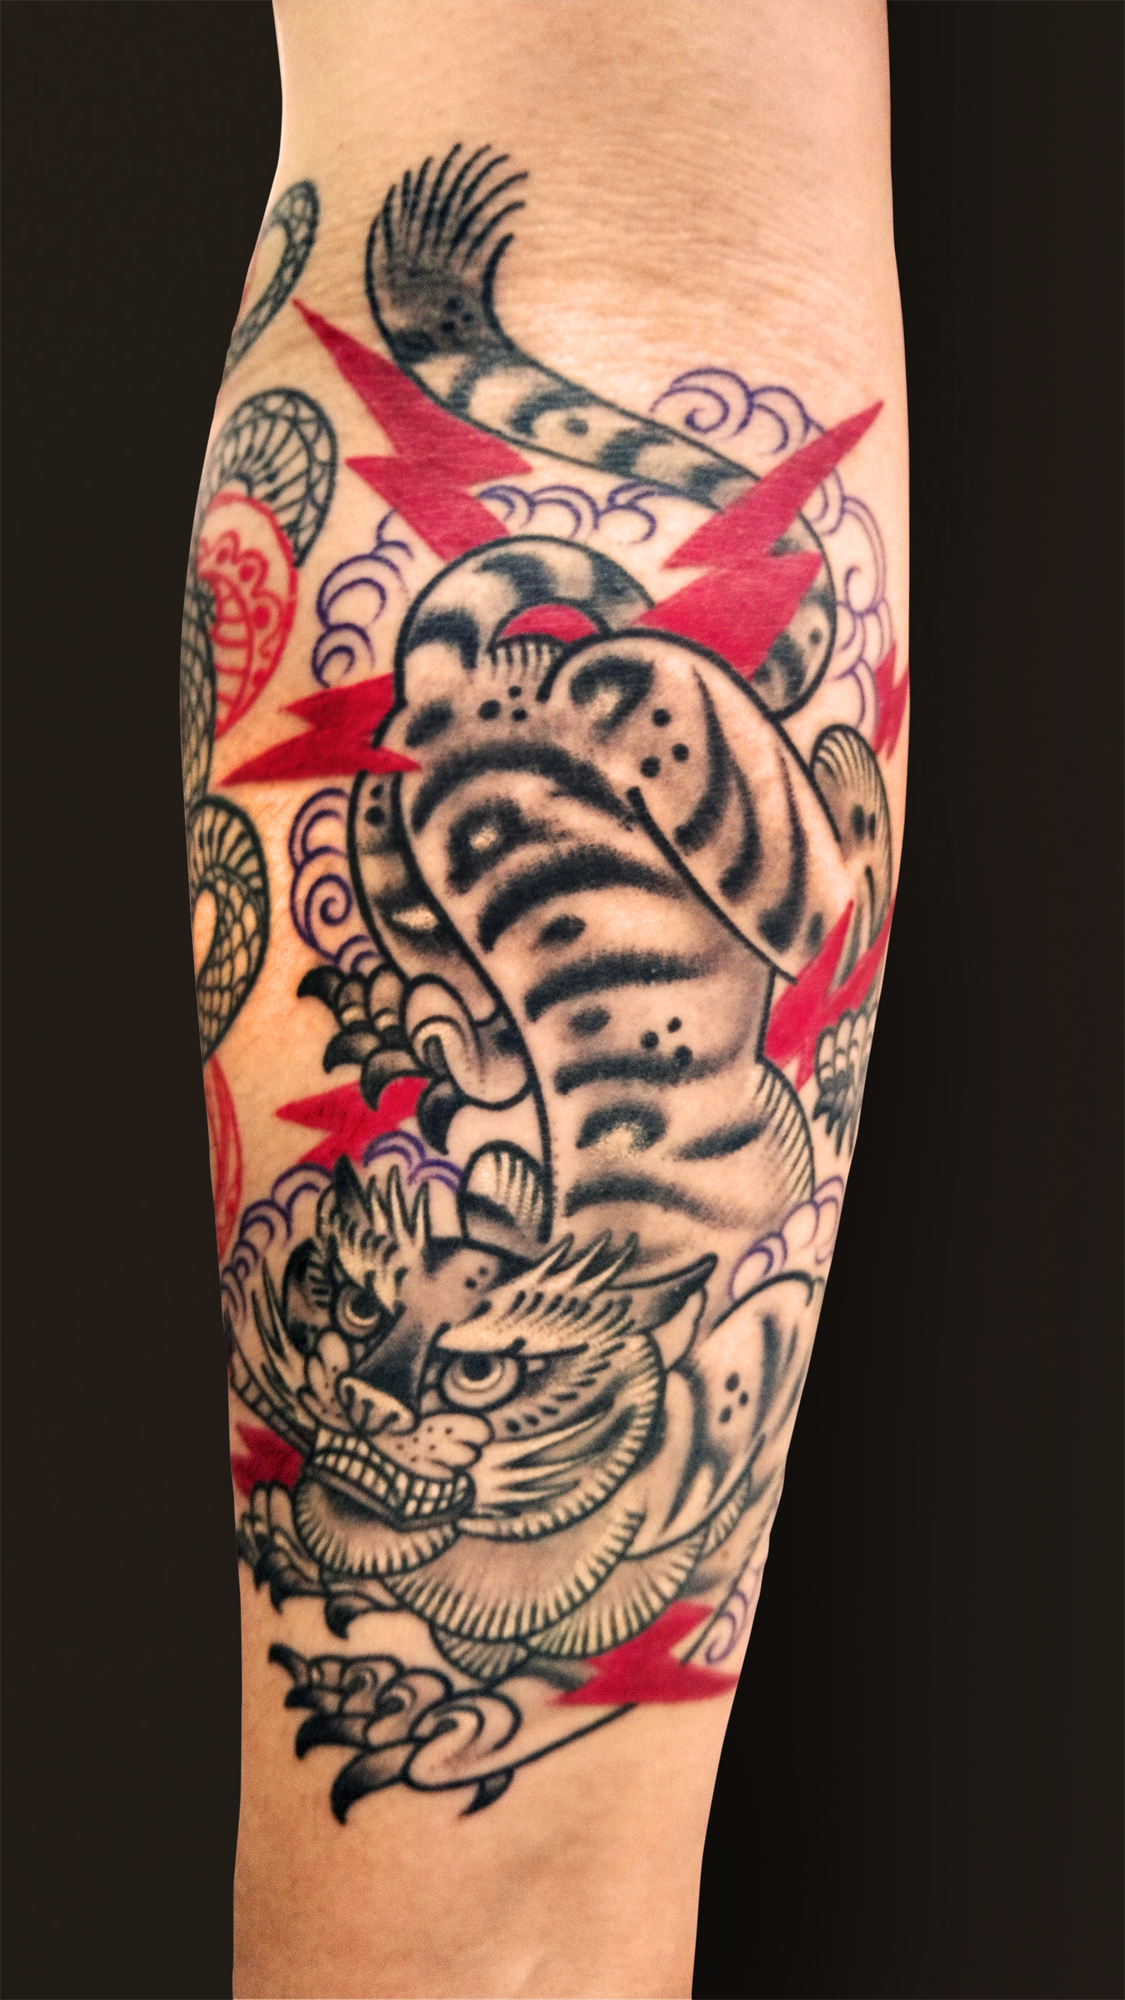 KING RAT TATTOO 作品 | LAVA gallery | Tattoo artist: Yuji Anai | キングラット | ラバギャラリー | タトゥーアート | 福岡県北九州市 | KIMG0083